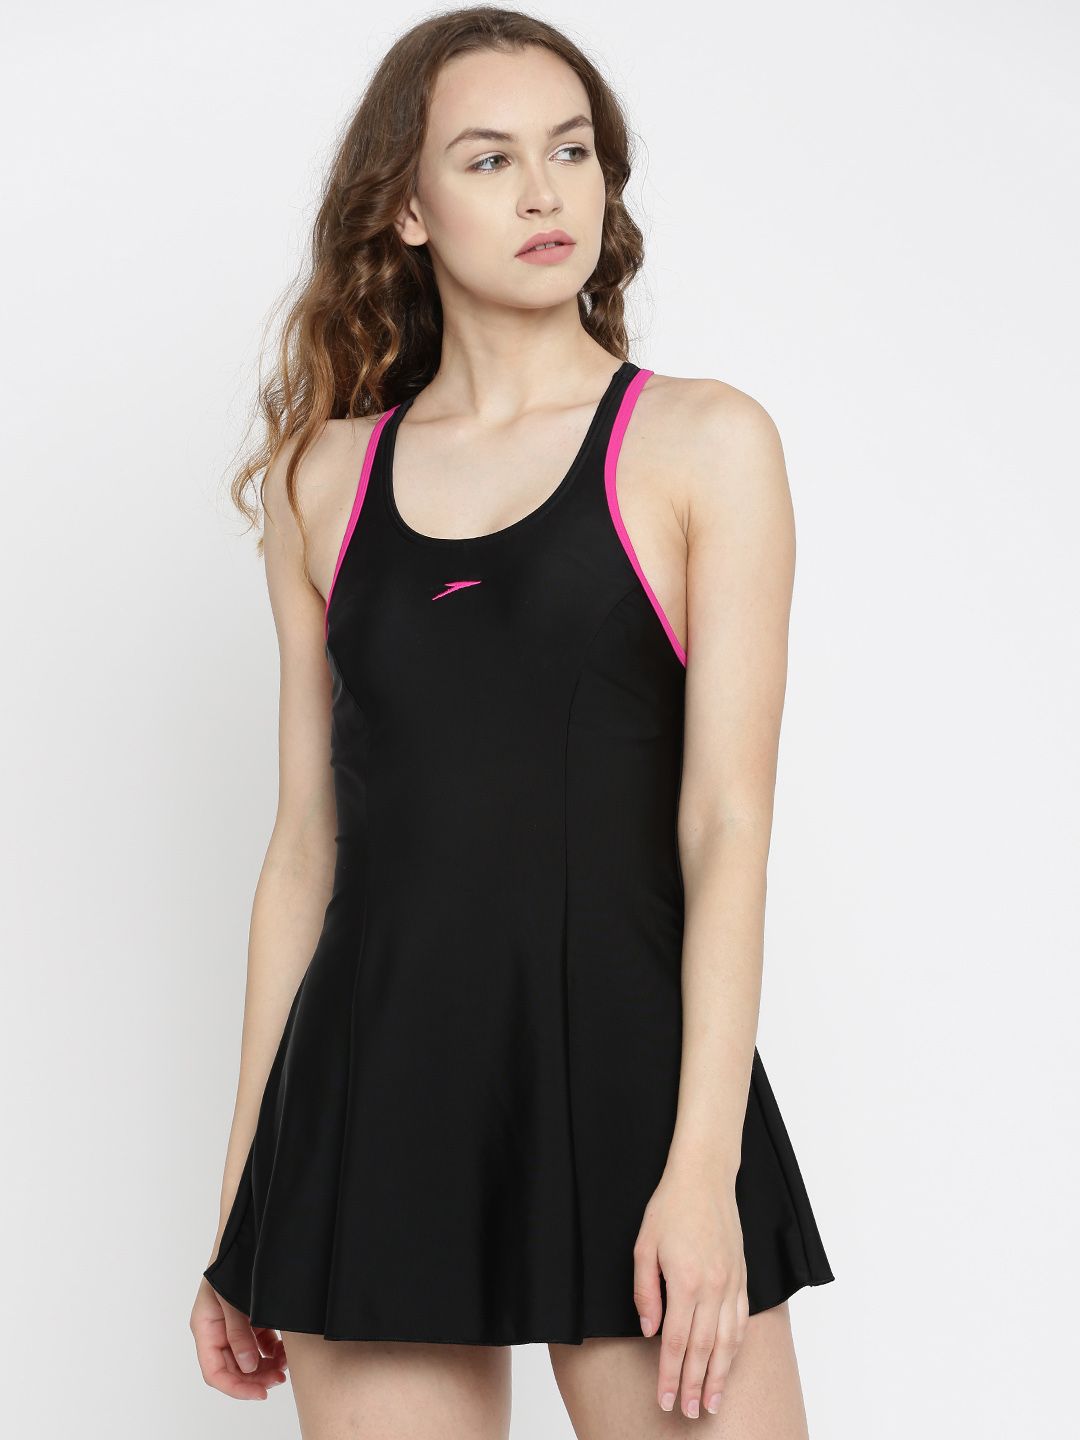 Speedo Black Swim Dress 802878B344 Price in India